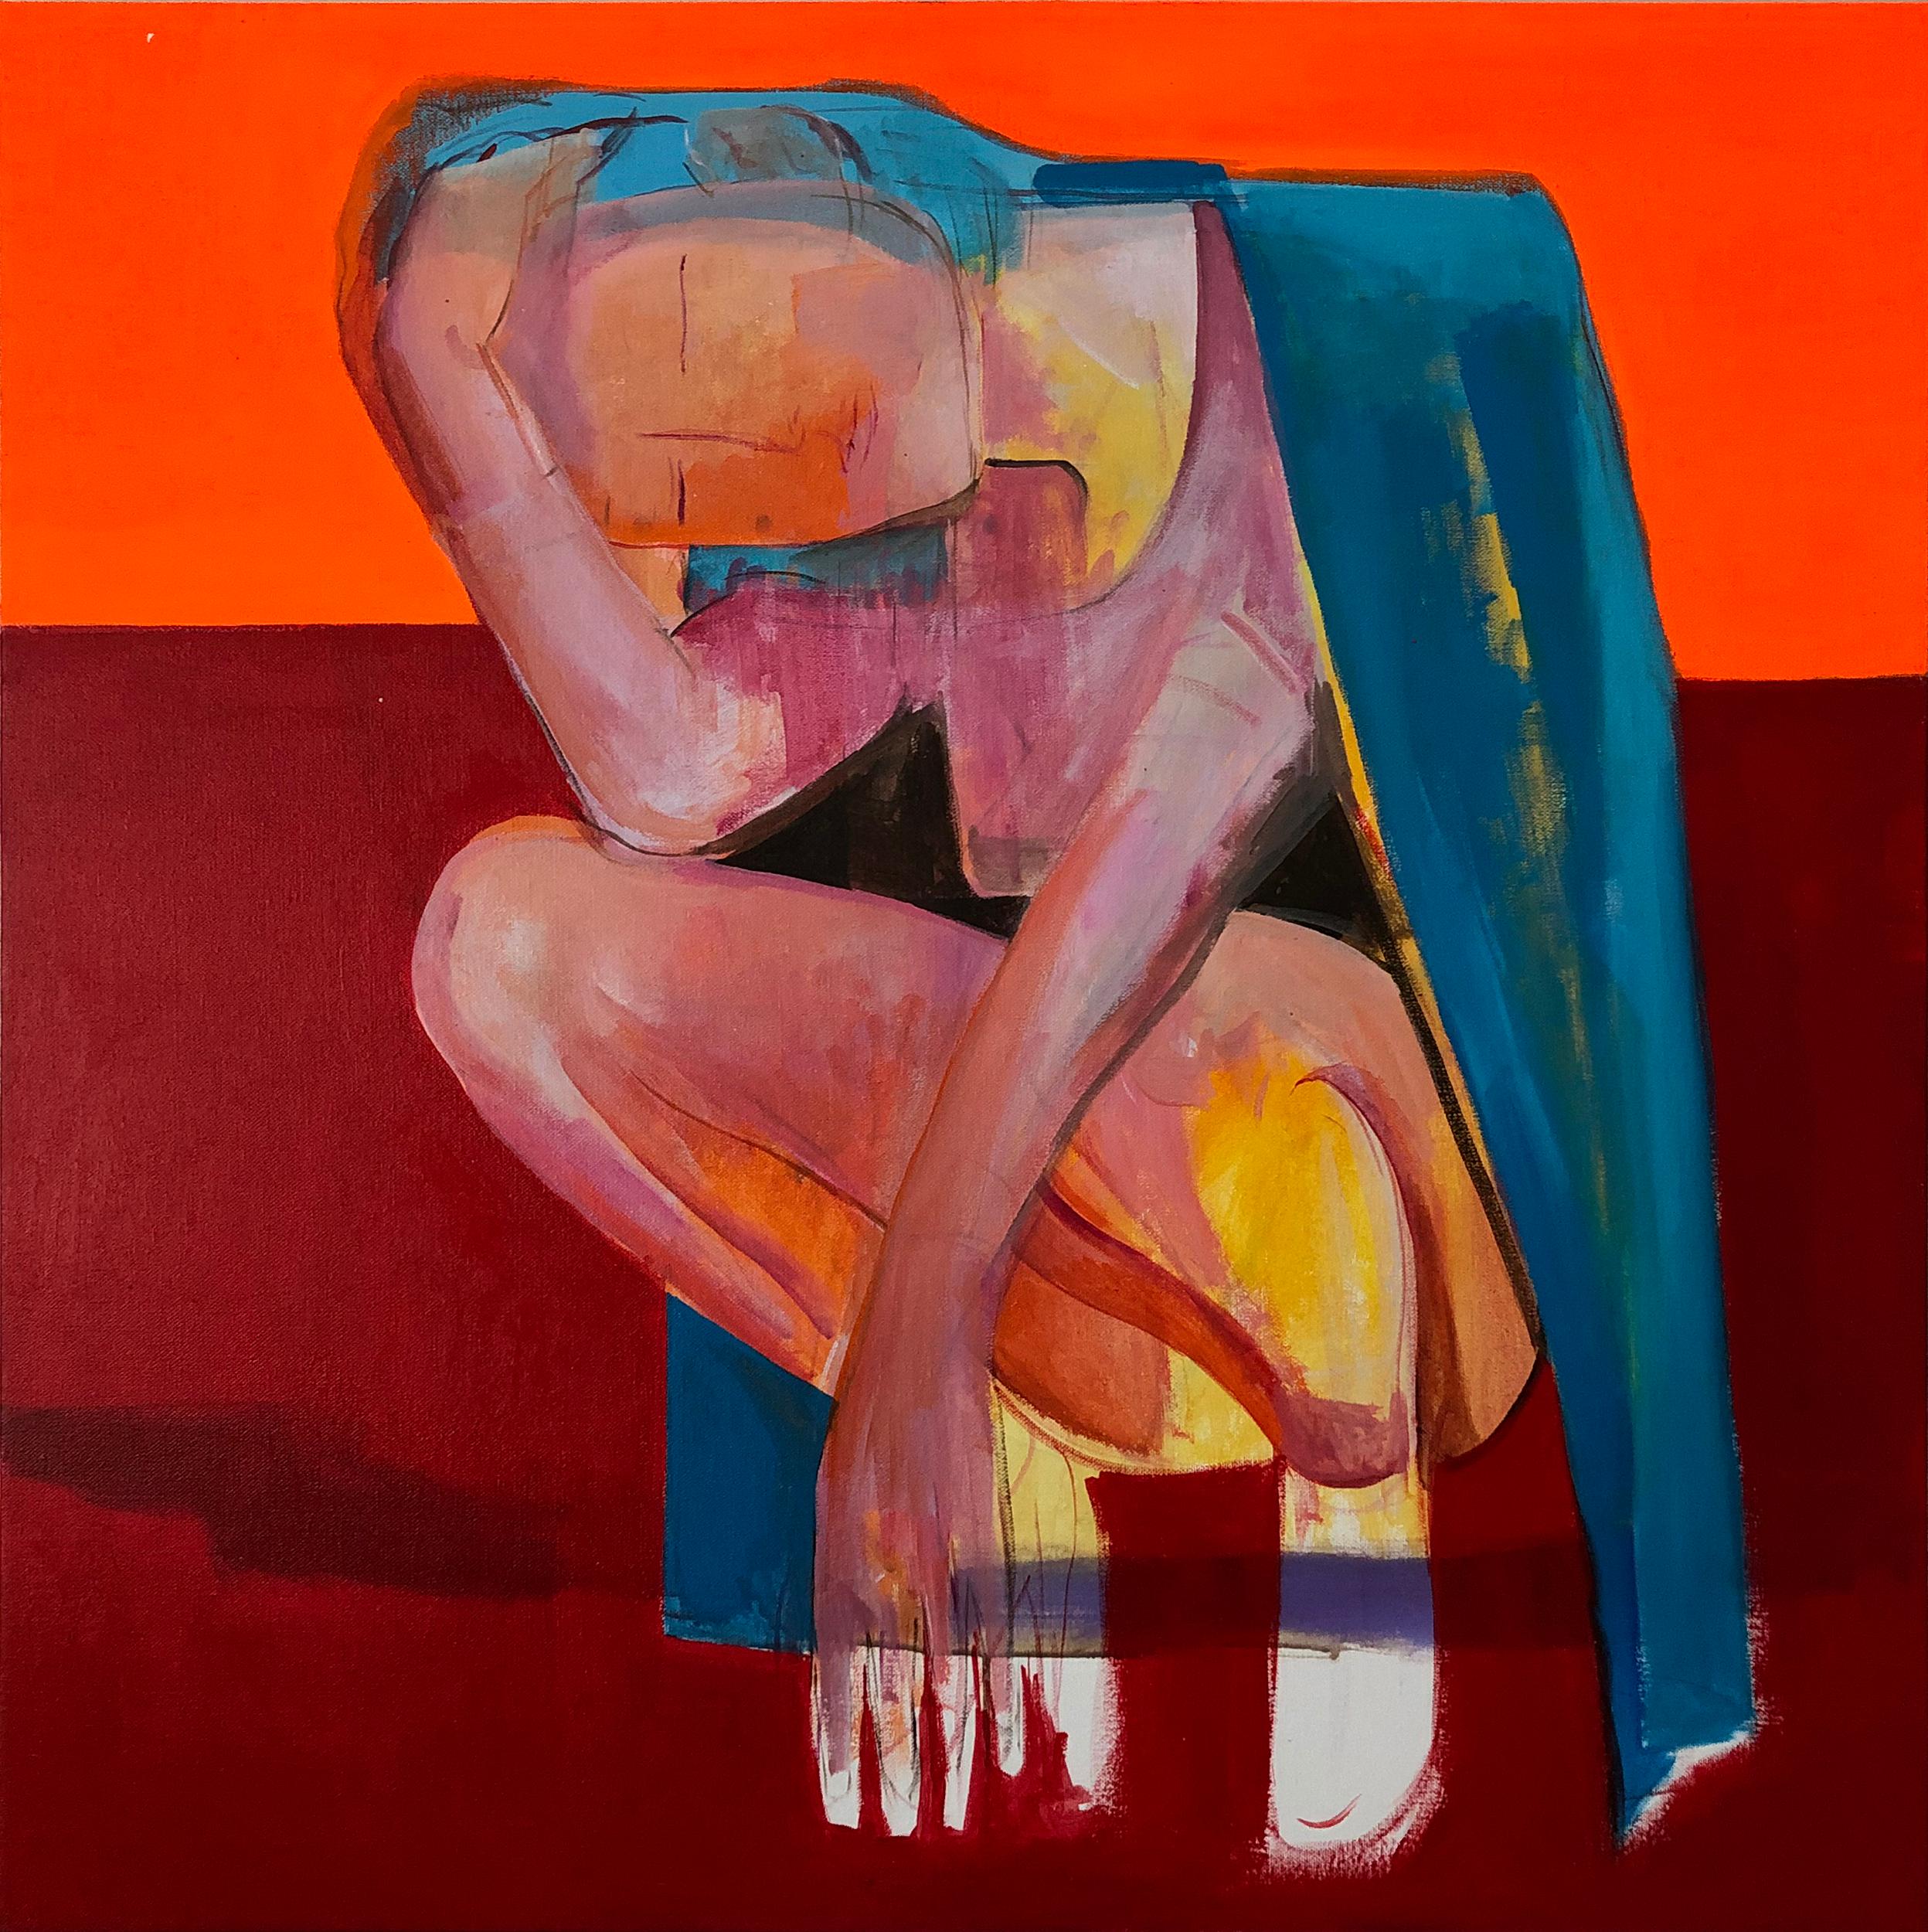 Ziui Vance Nude Painting - Waiting